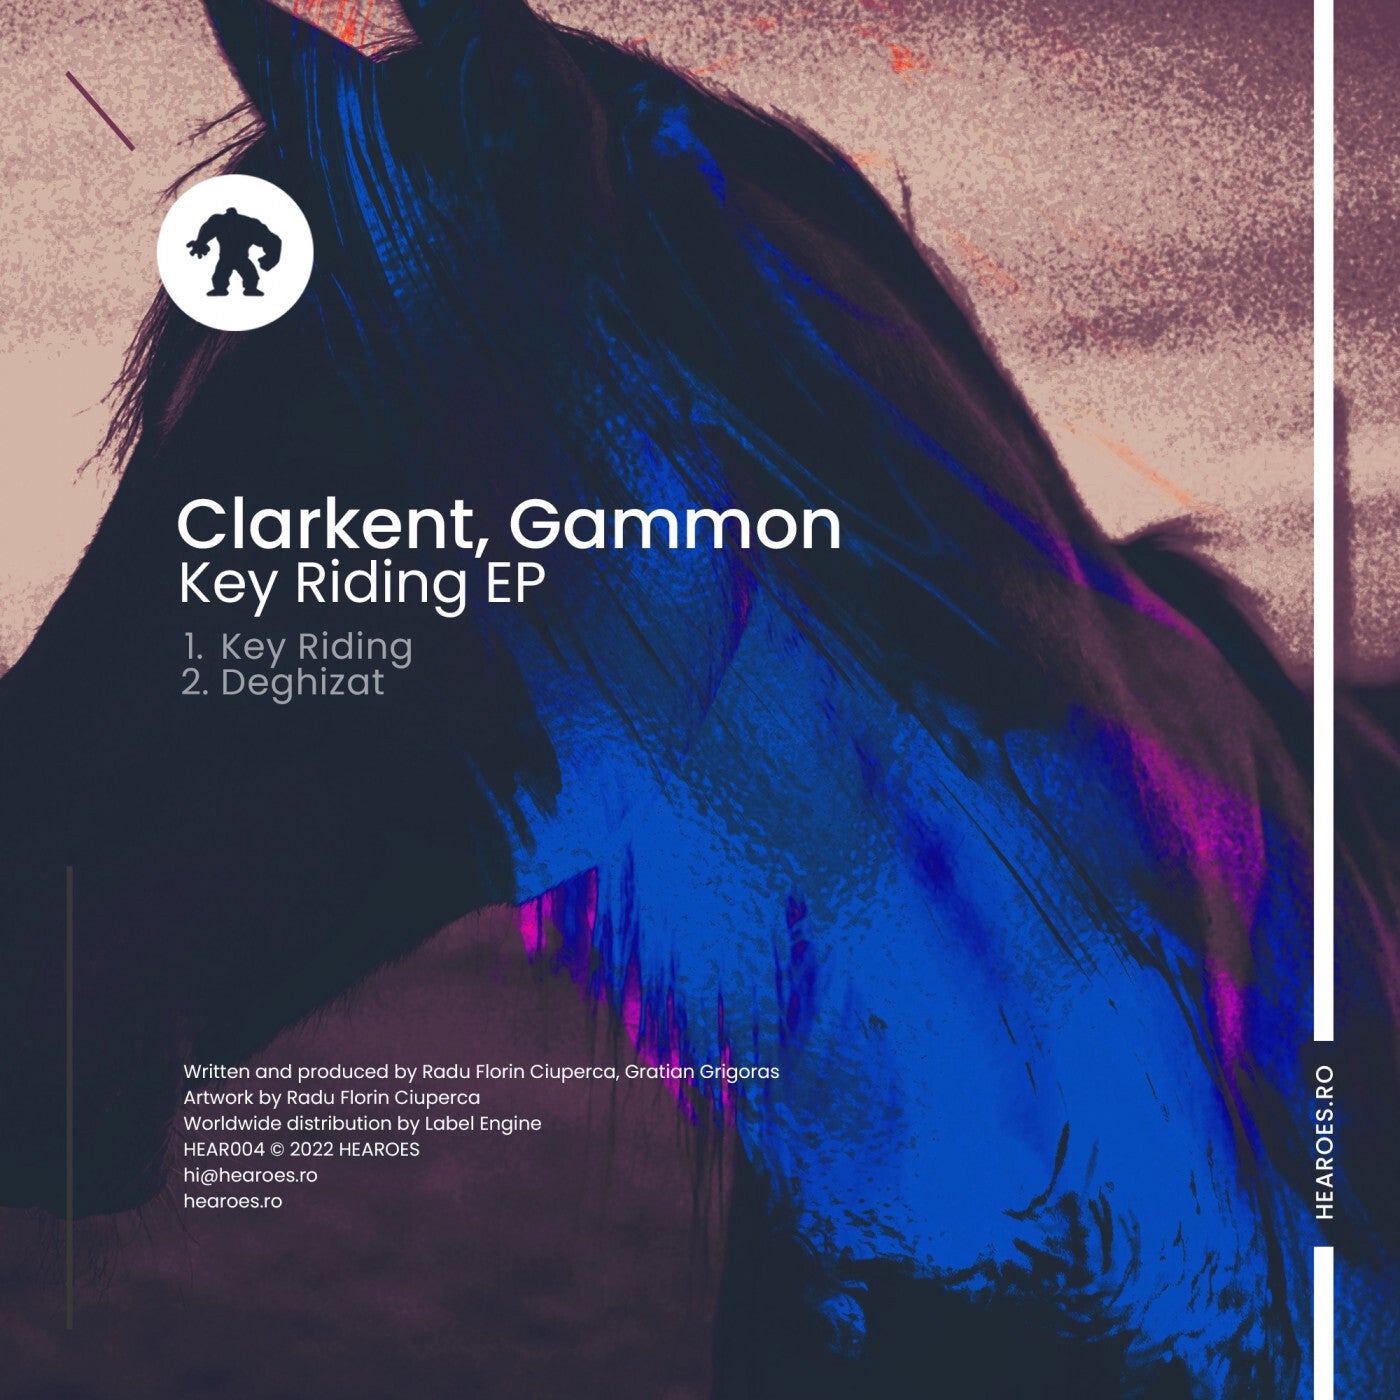 Clarkent, Gammon (RO) - Key Riding EP [HEAR004]